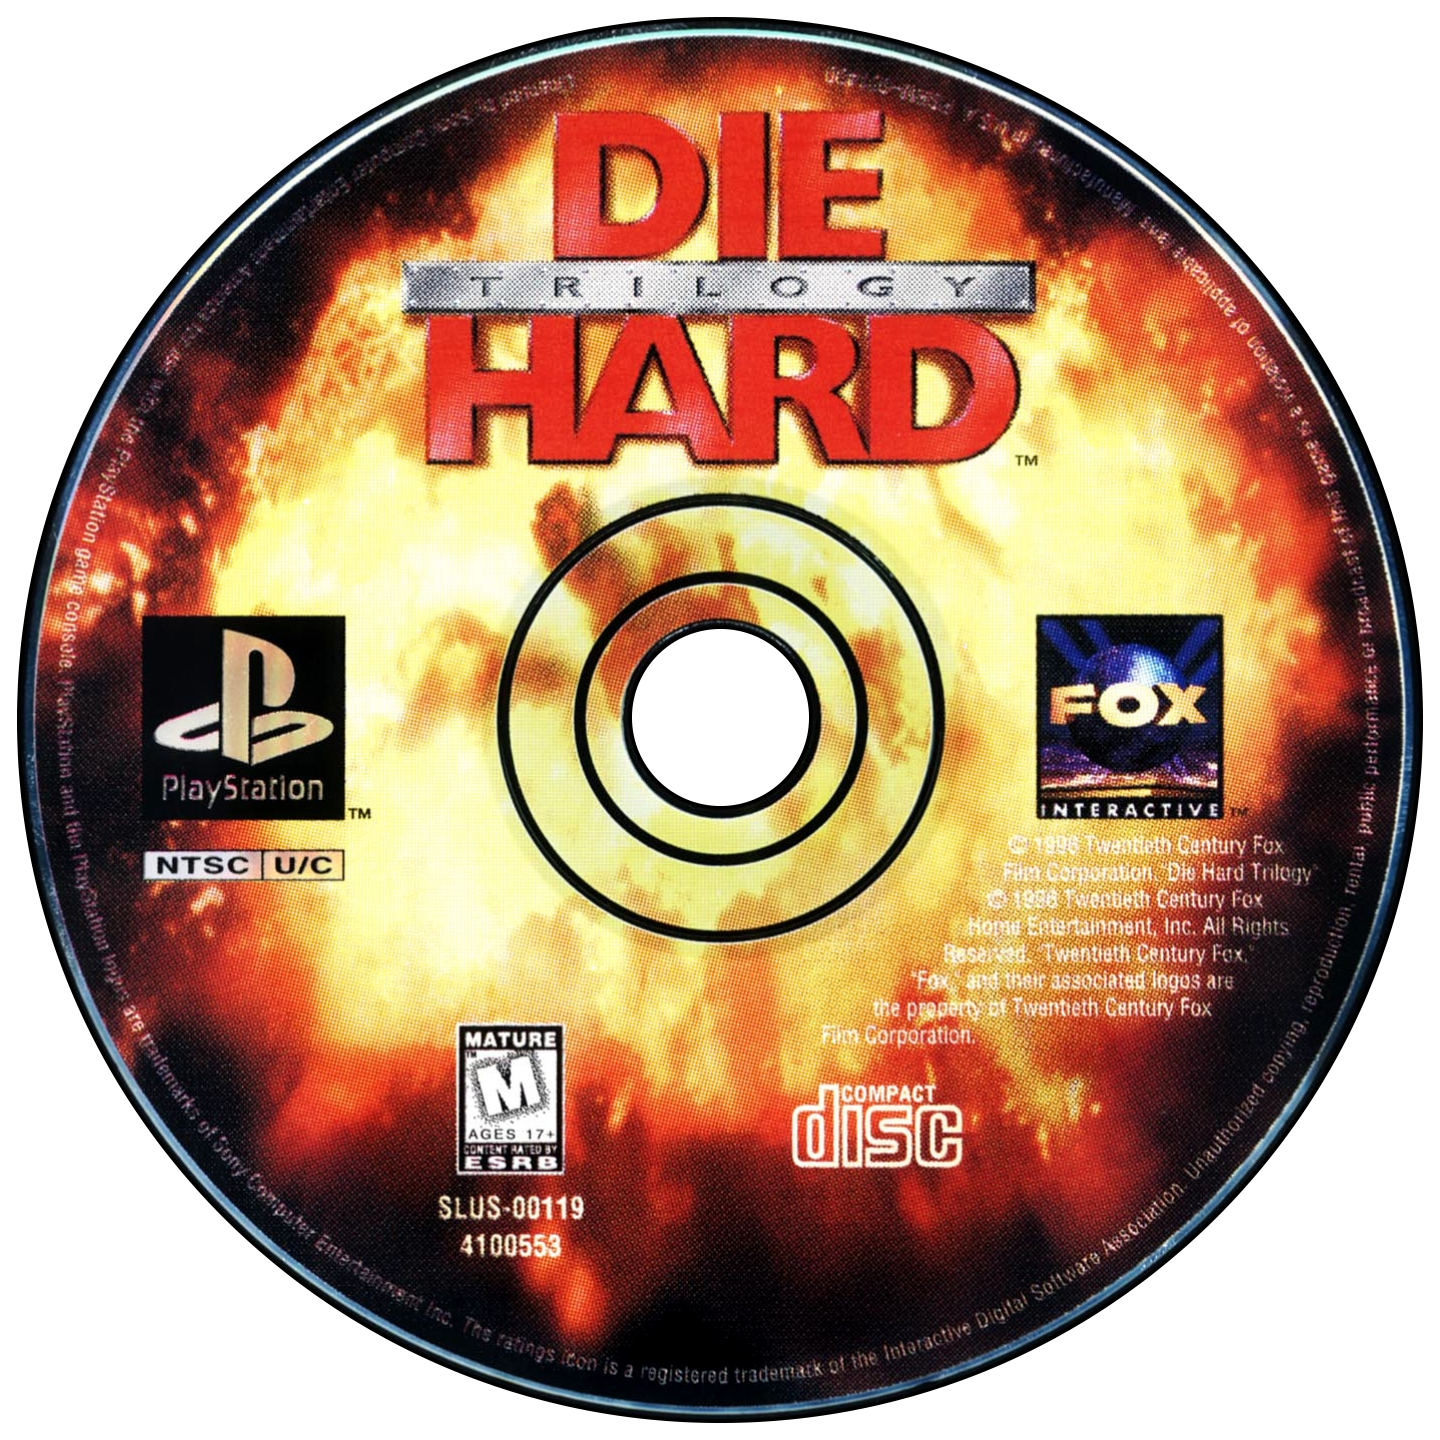 Включи игра диск. Die hard Trilogy ps1 обложка. Die hard Trilogy 2 CD ps1. Крепкий орешек ps1. Die hard Trilogy ps1 Pal.